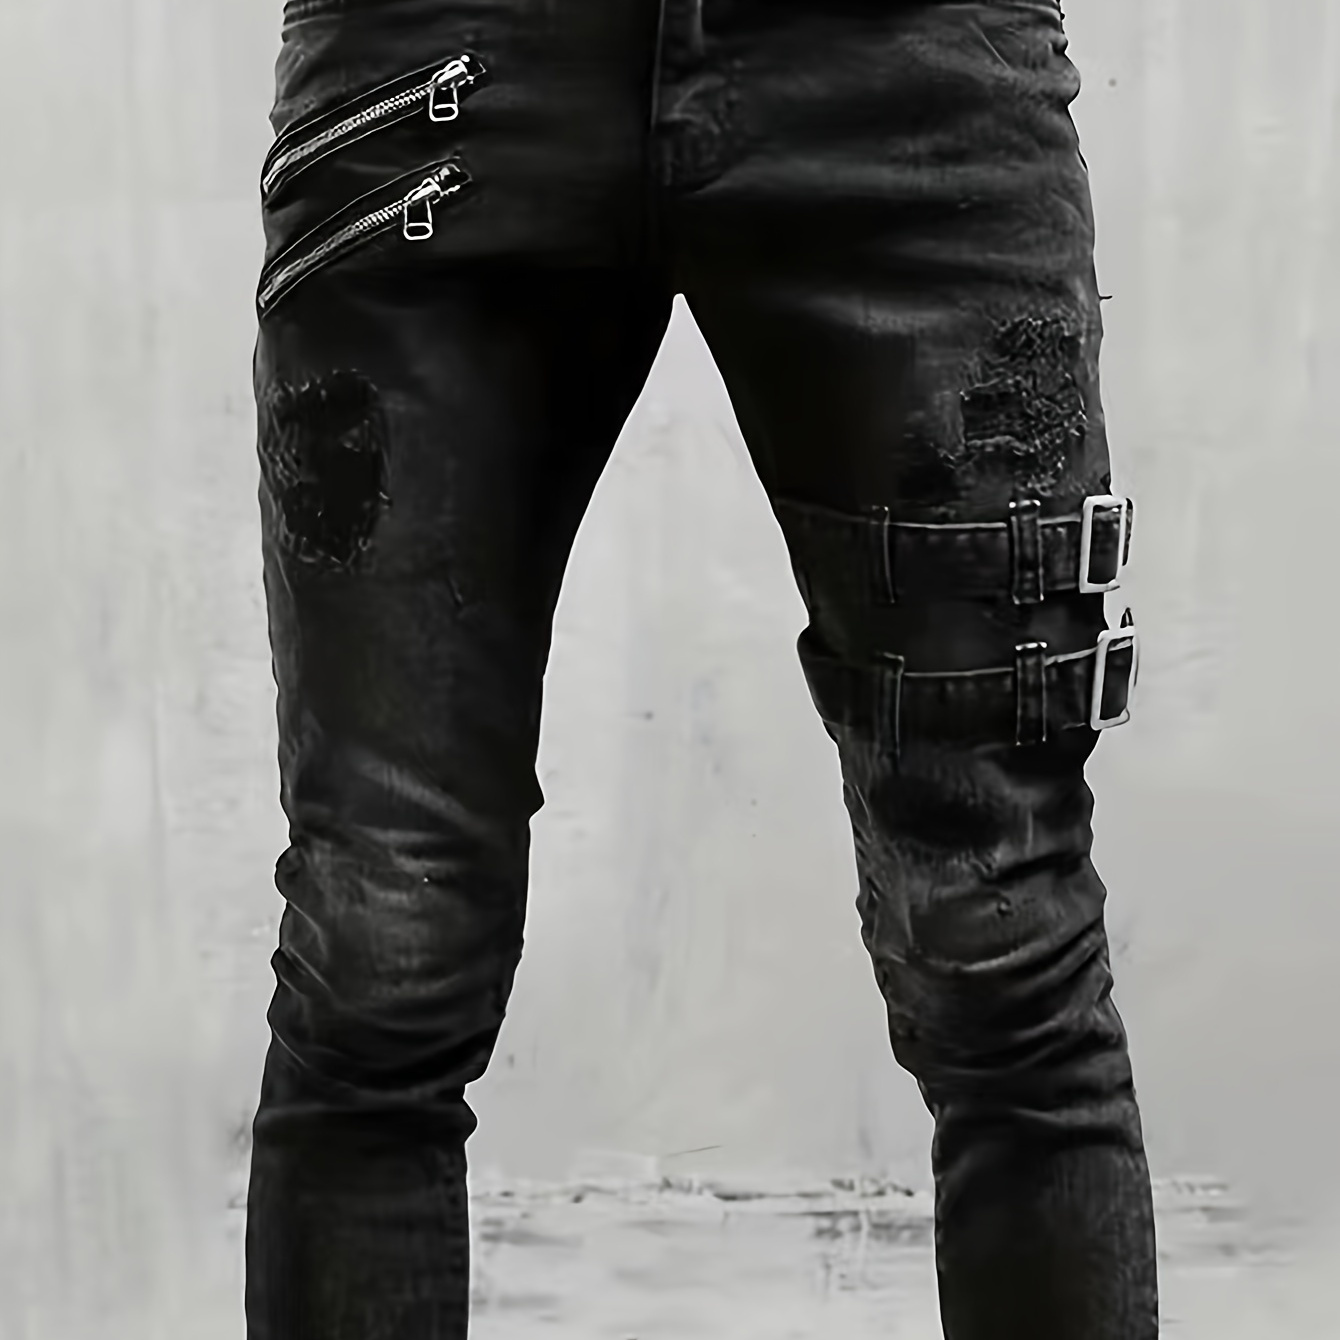 

Slim Fit Biker Jeans, Men's Casual Street Style Distressed Stretch Denim Pants